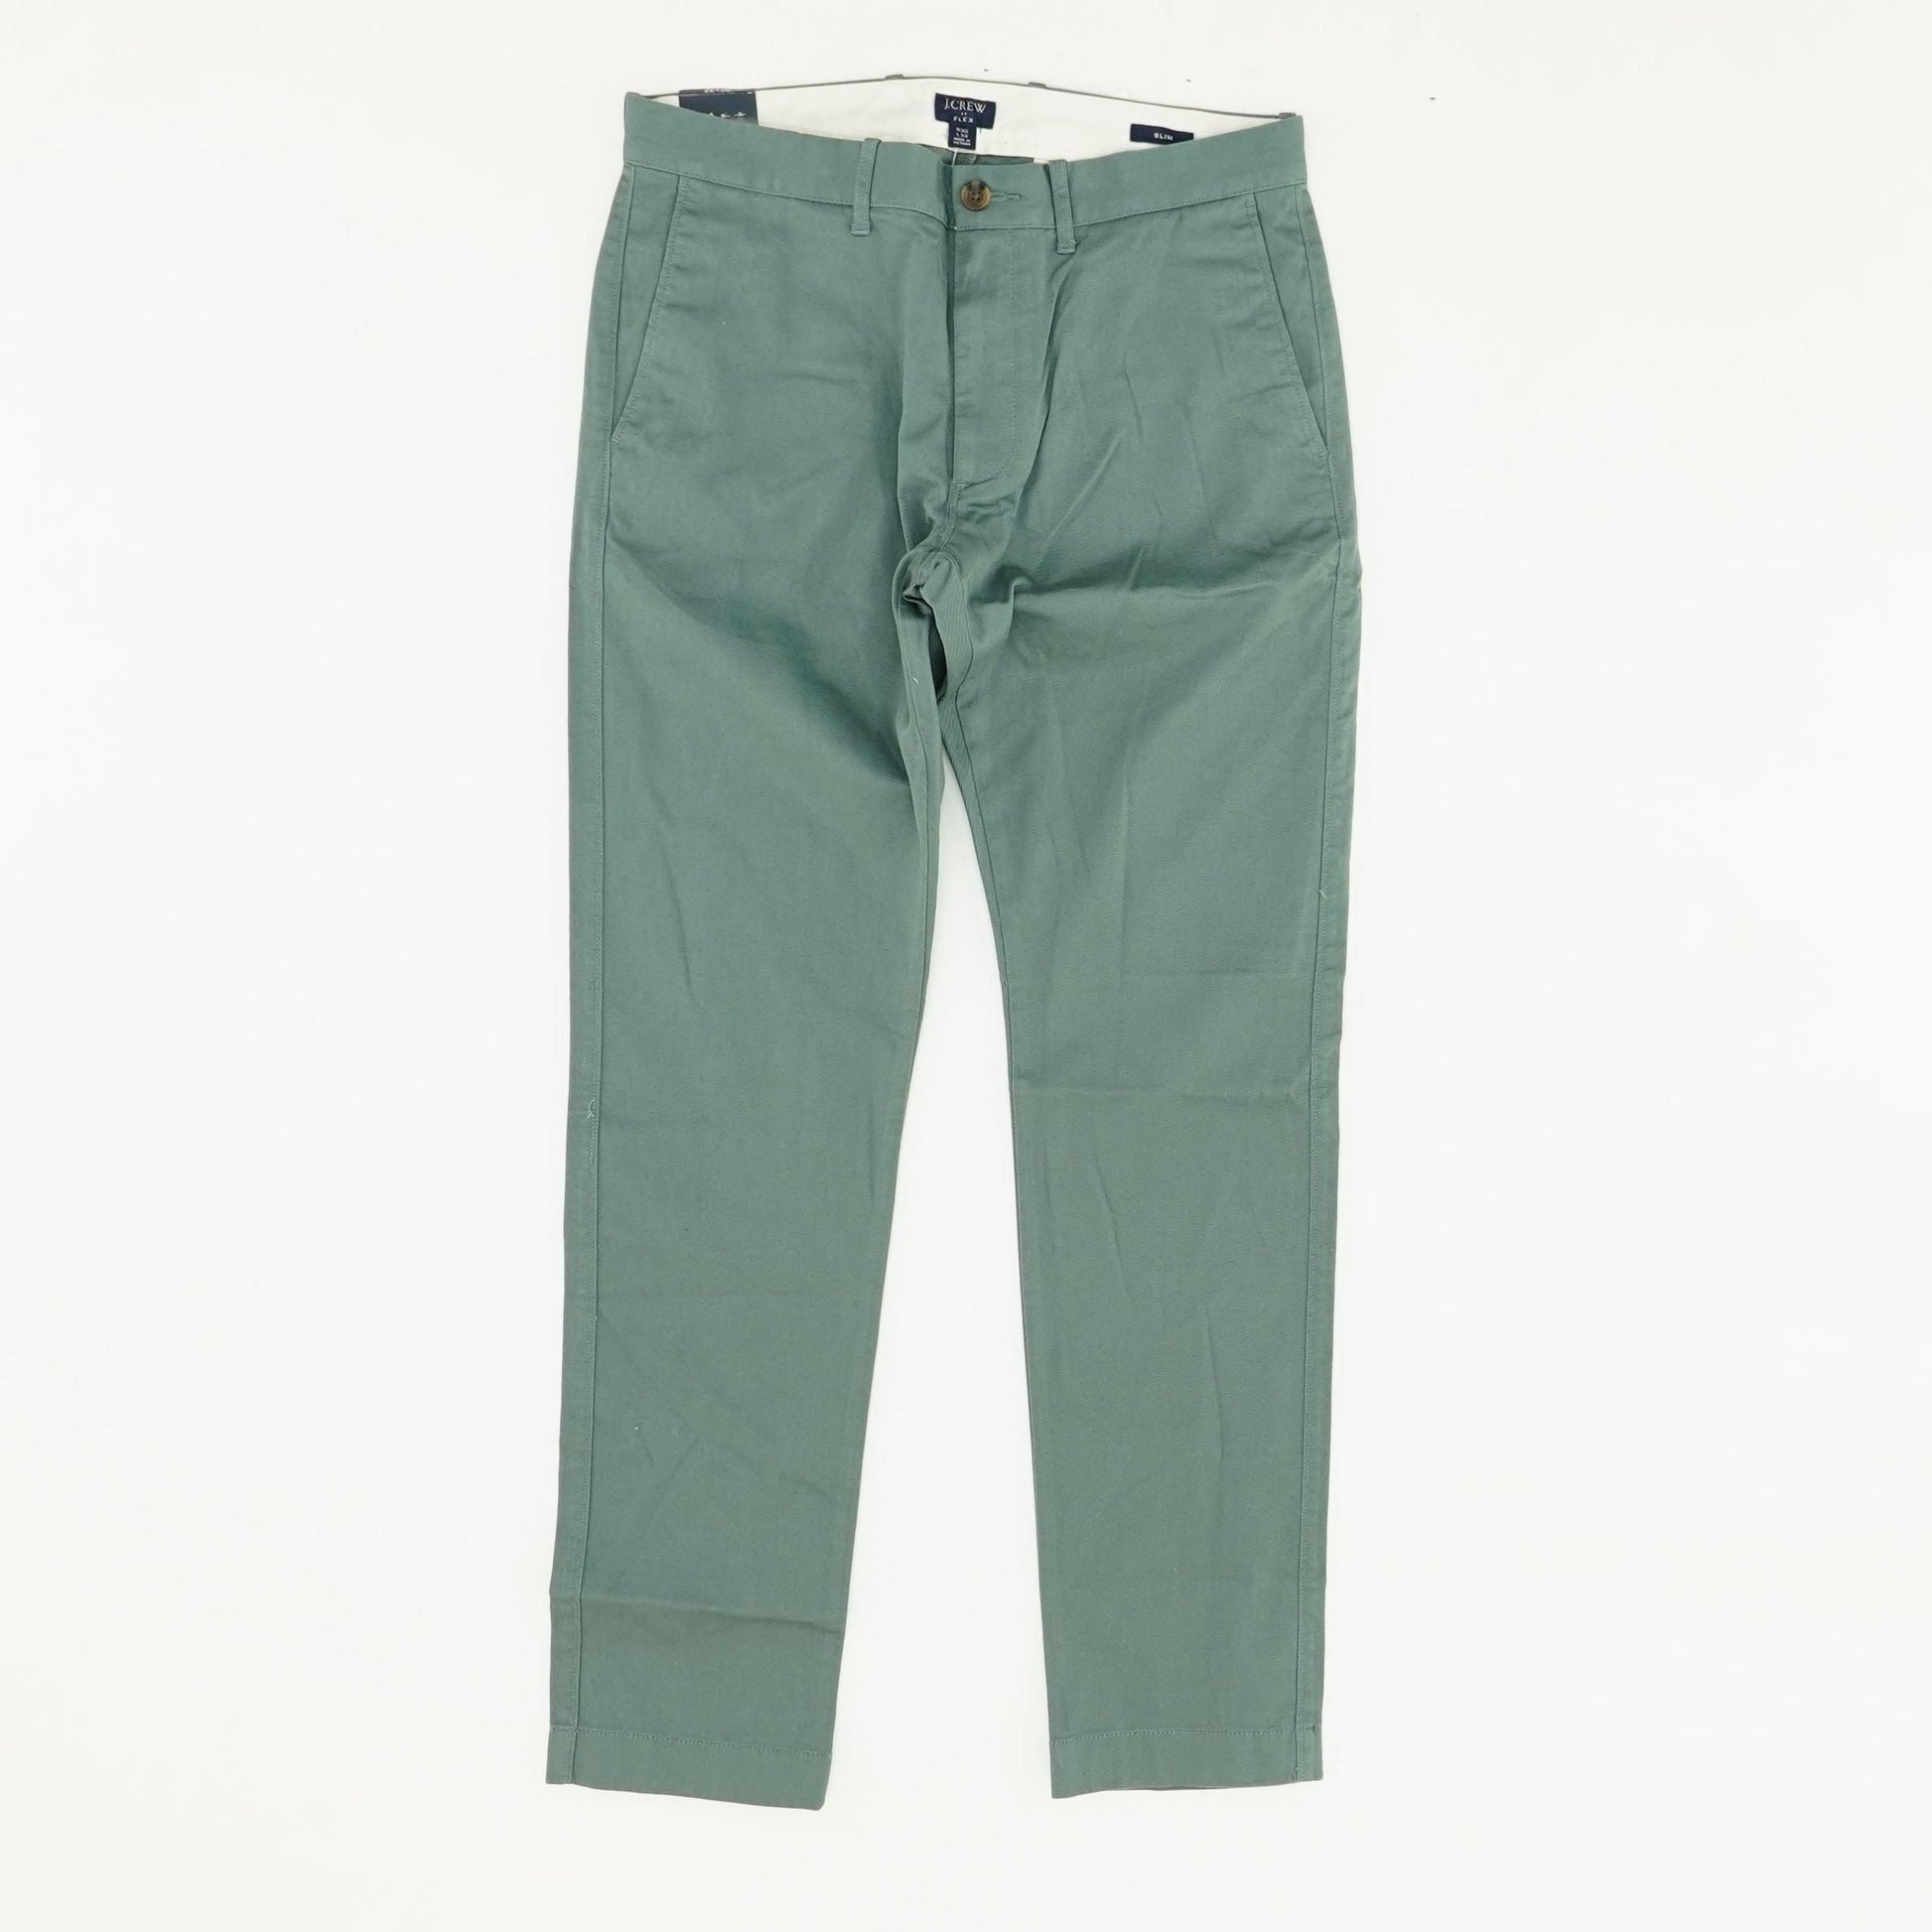 Buy the J. Crew Green Flex Slacks/Pants Size 31x32